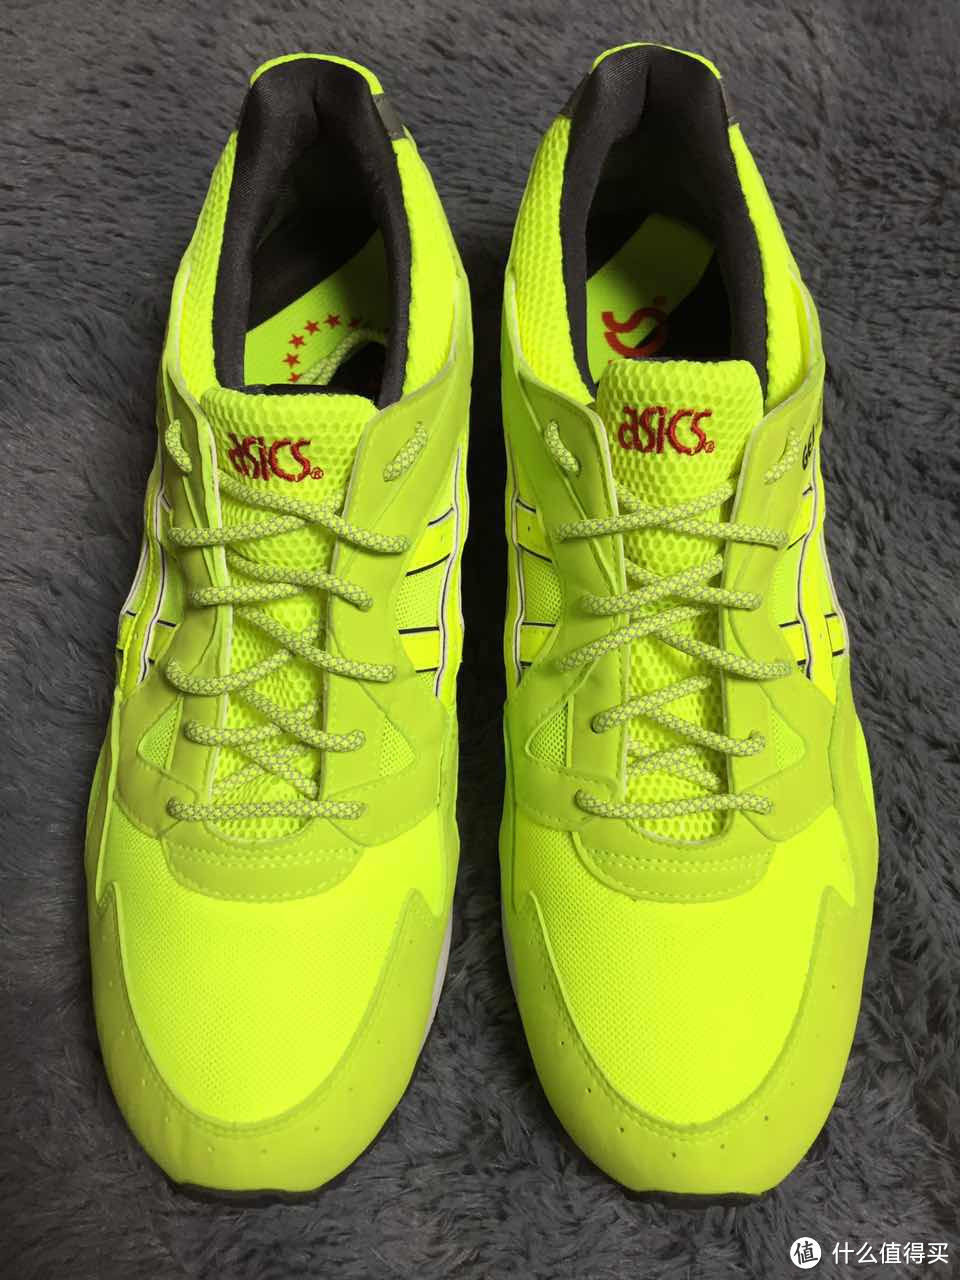 UBIQ x Asics Gel Lyte V "Hazard" 亚瑟士运动鞋GOTEX版与普通版对比